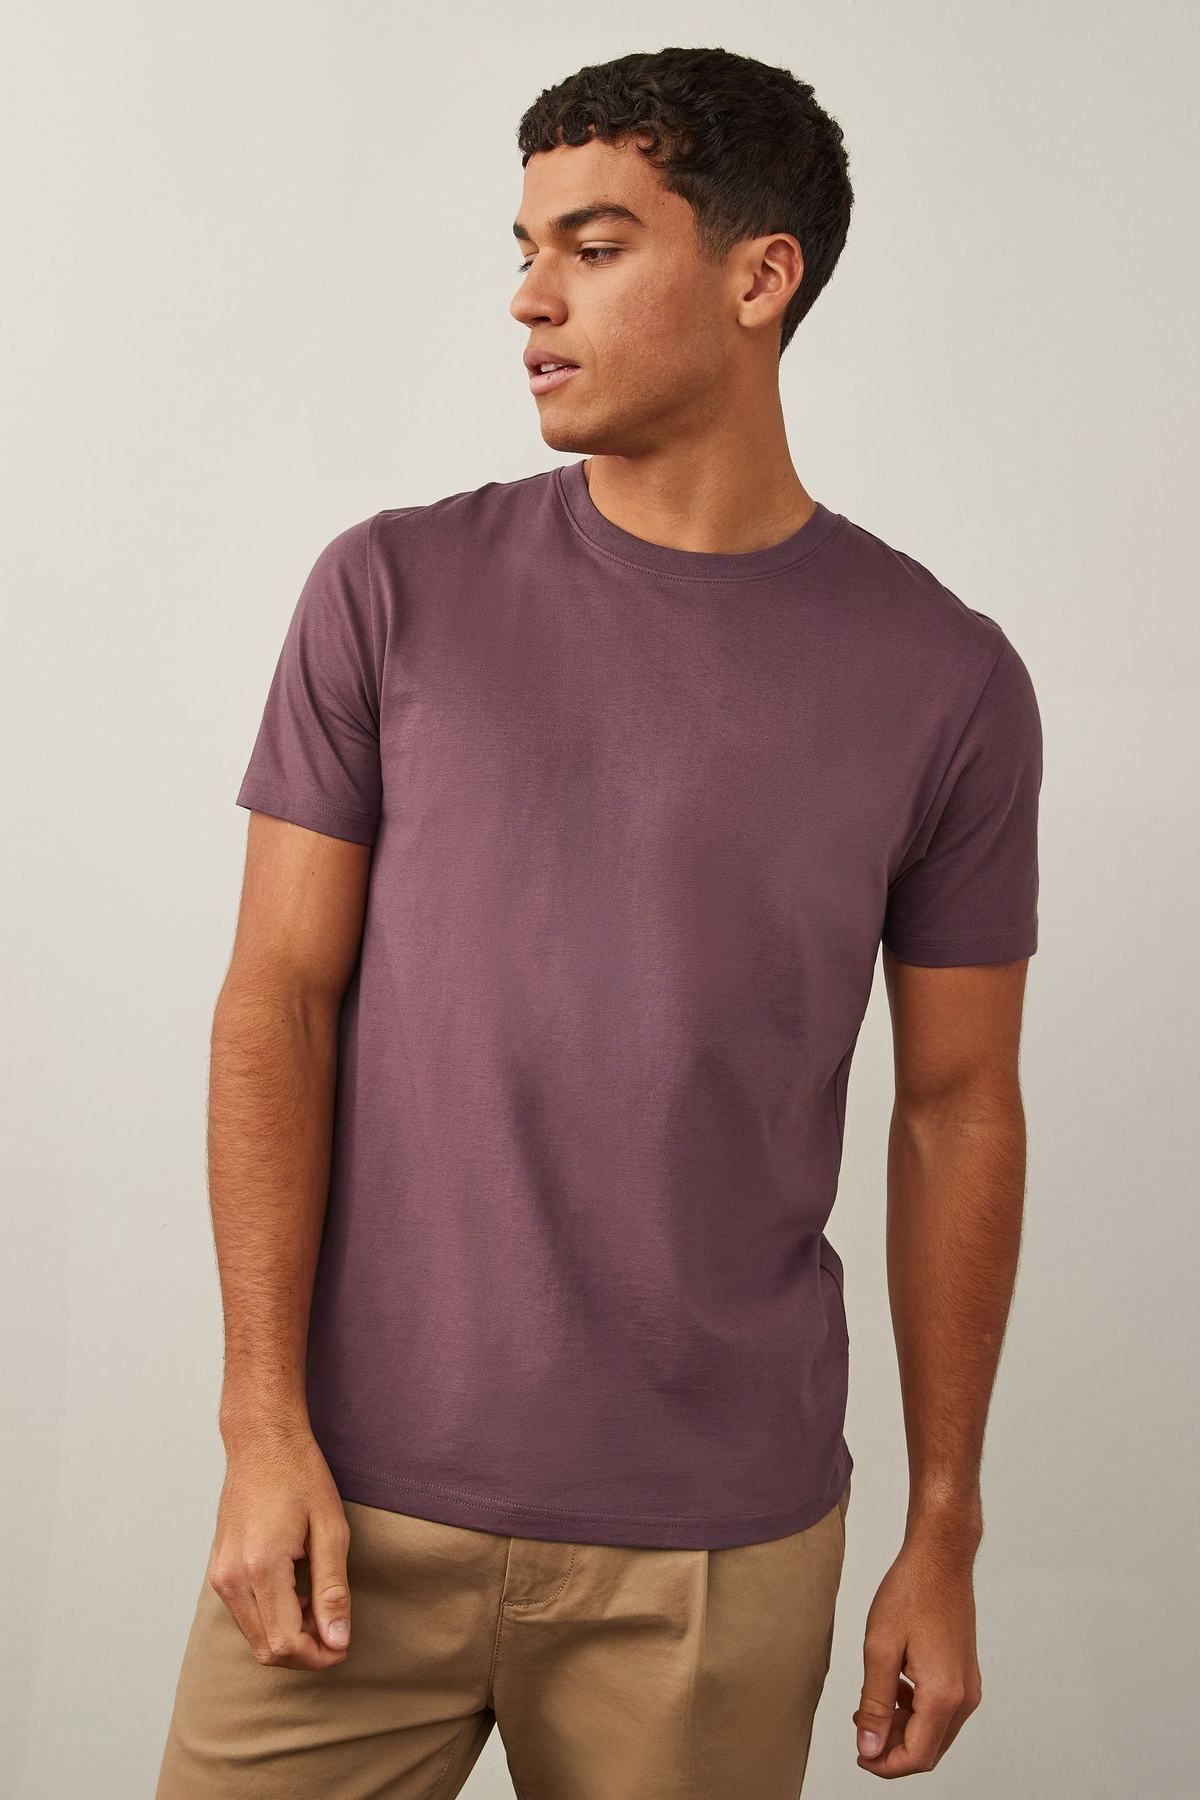 NEXT essential-crew-neck-t-shirt-nxt-u92667-purple Monochrome Men